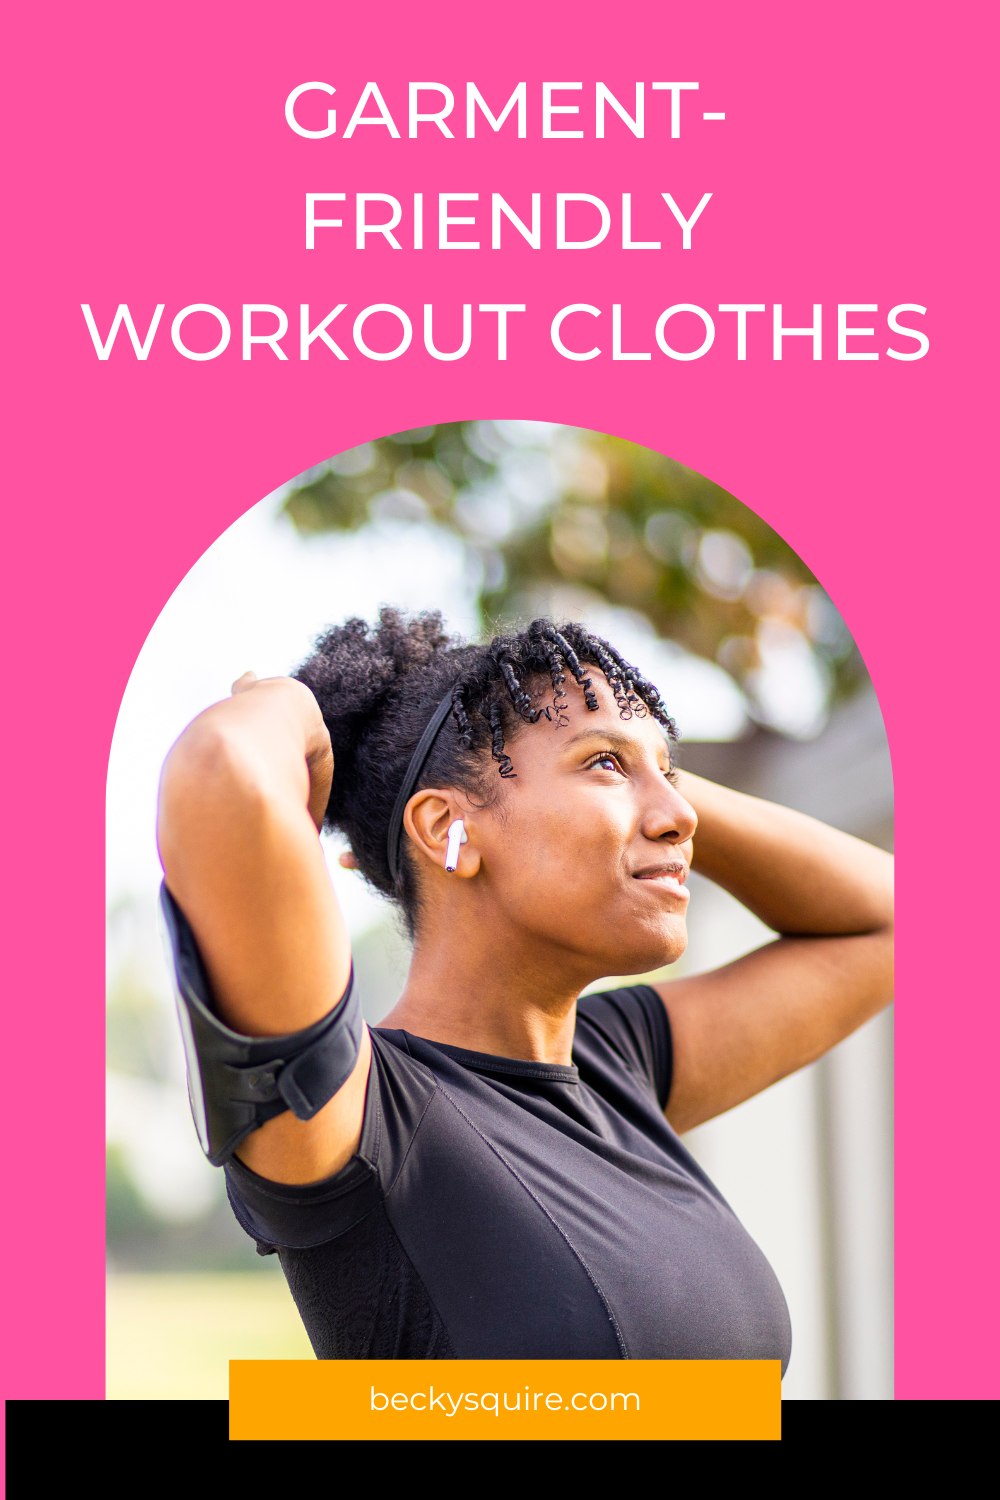 garment-friendly workout clothes